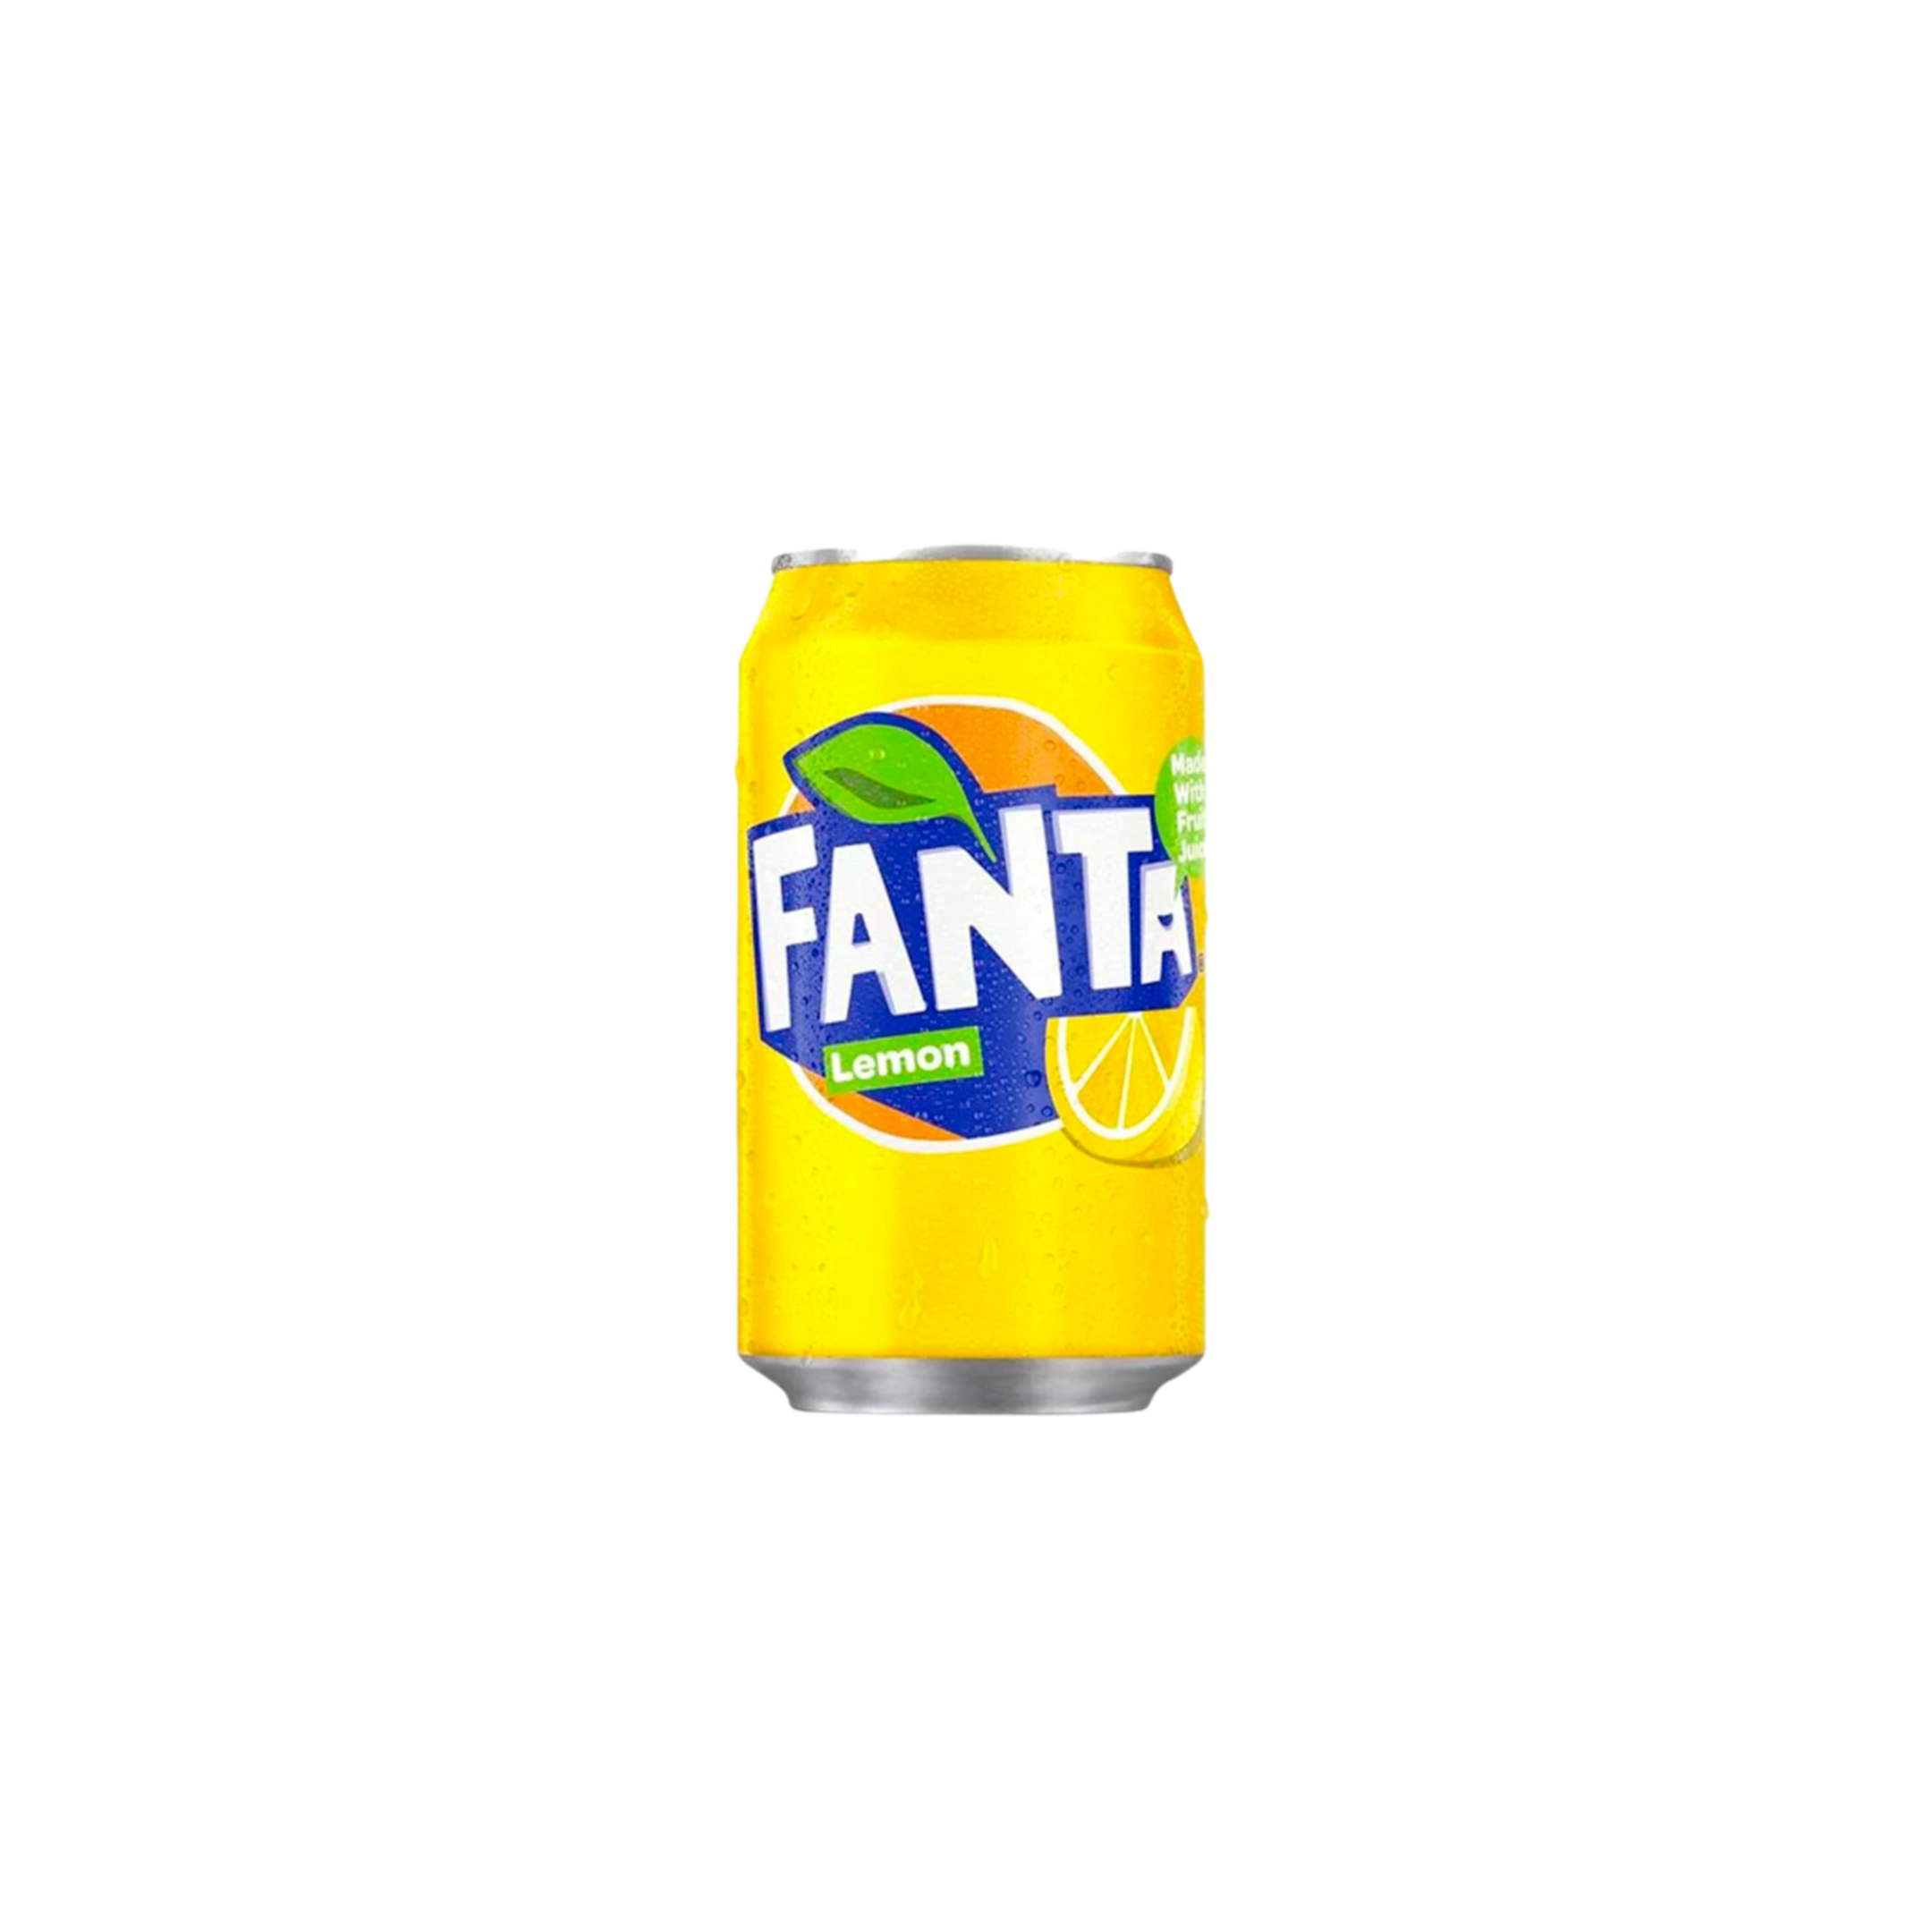 Fanta Lemon 330ml - The Coca-Cola Company – Snack Global